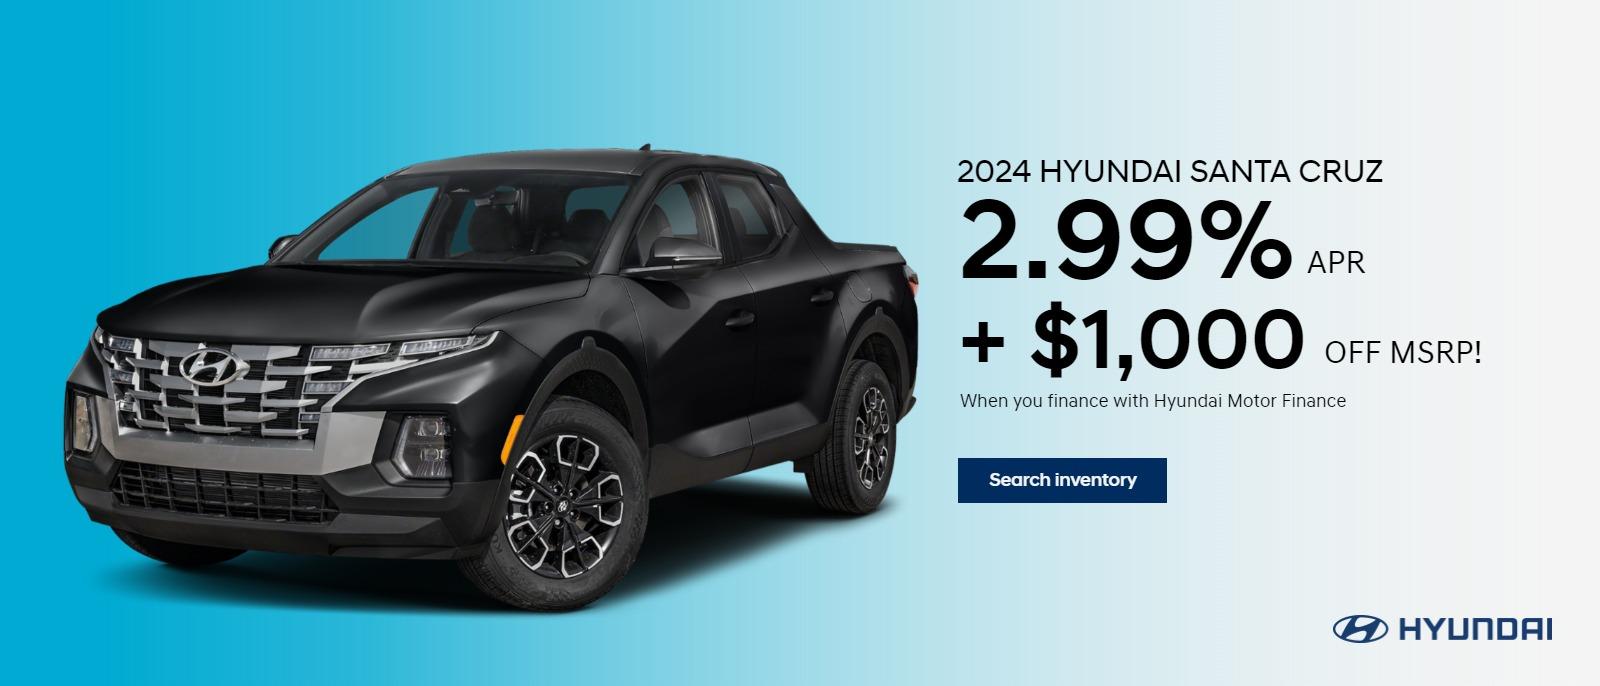 2023 Hyundai Santa Cruz
2.99% APR
+ $1,000 off MSRP!
--When you finance with Hyundai Motor Finance--